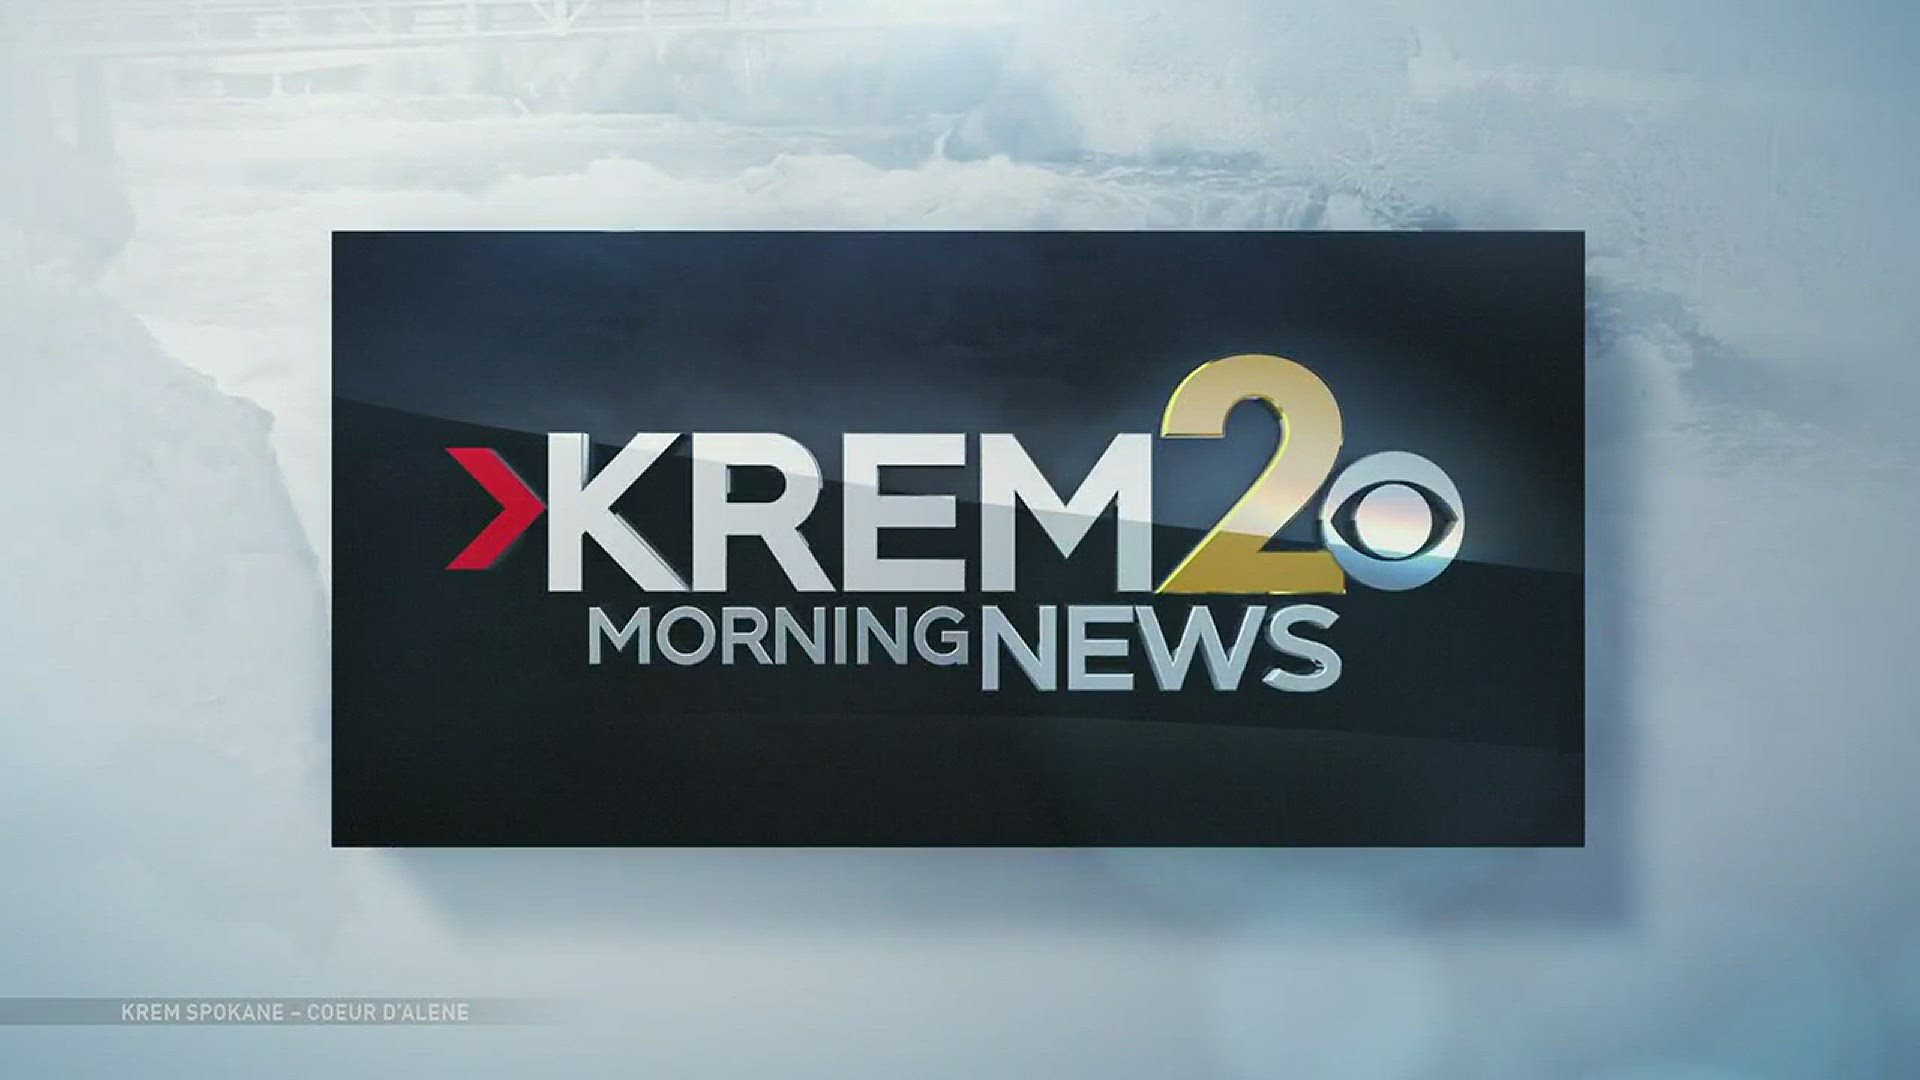 KREM 2 Morning News with anchors Sten Walstrom, Laura Papetti, Jen York and meteorologist Katie Boer.